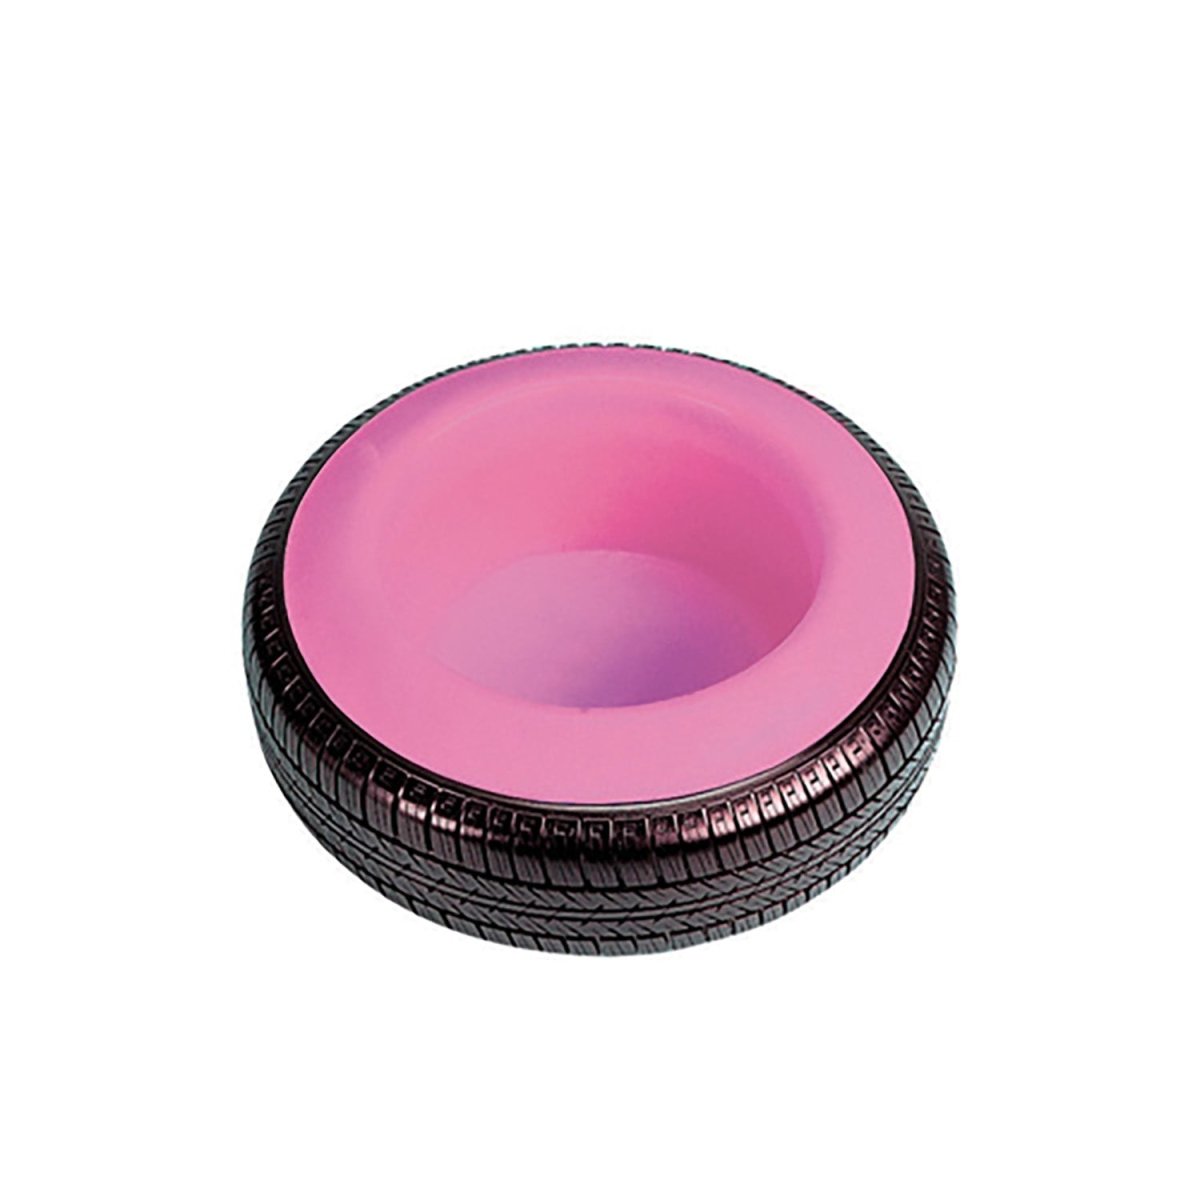 Stubbs Tyre Bowl - Pink - 18Lt